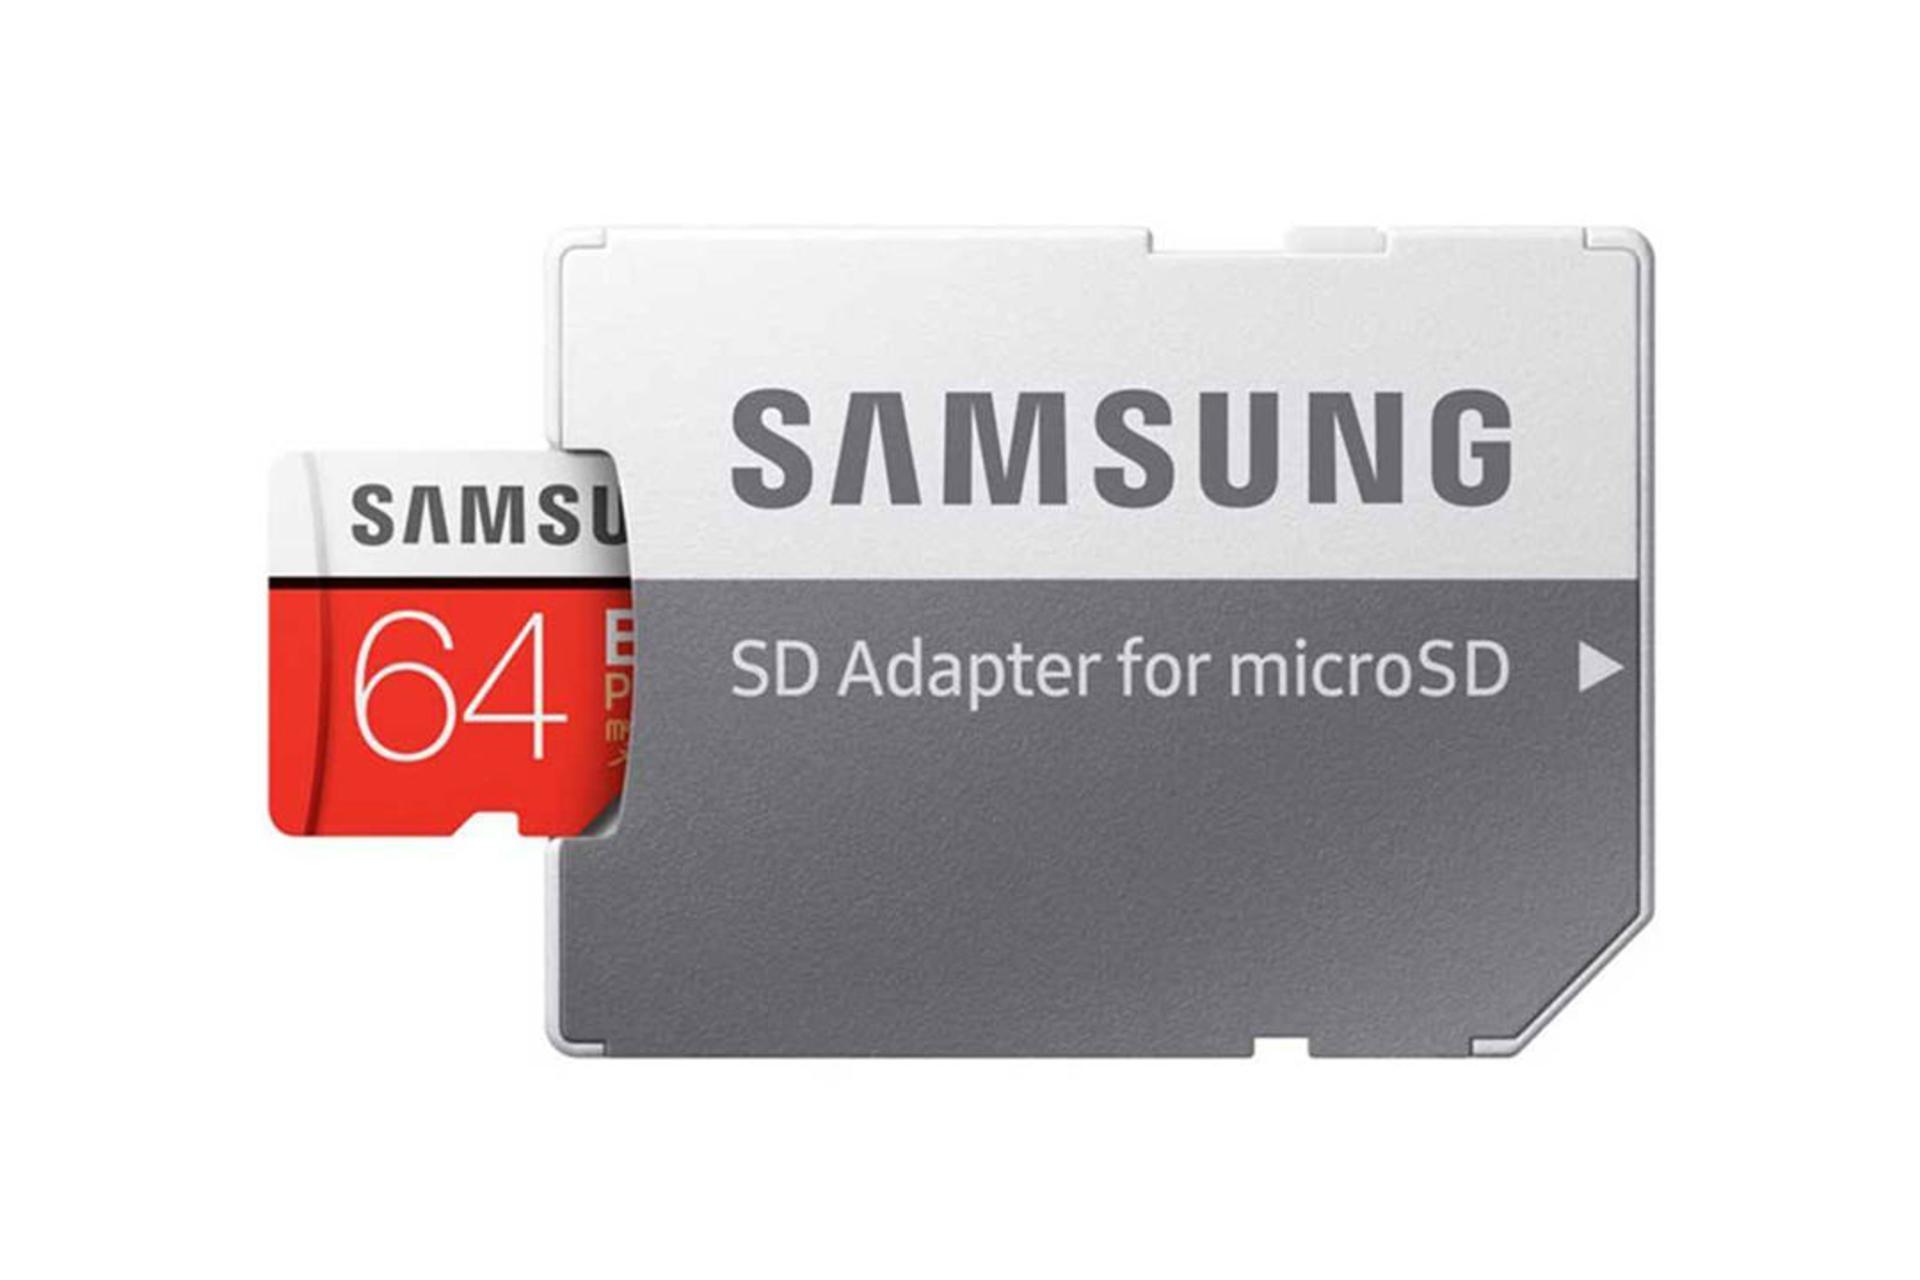 Samsung Evo Plus microSDXC Class 10 UHS-I U3 64GB